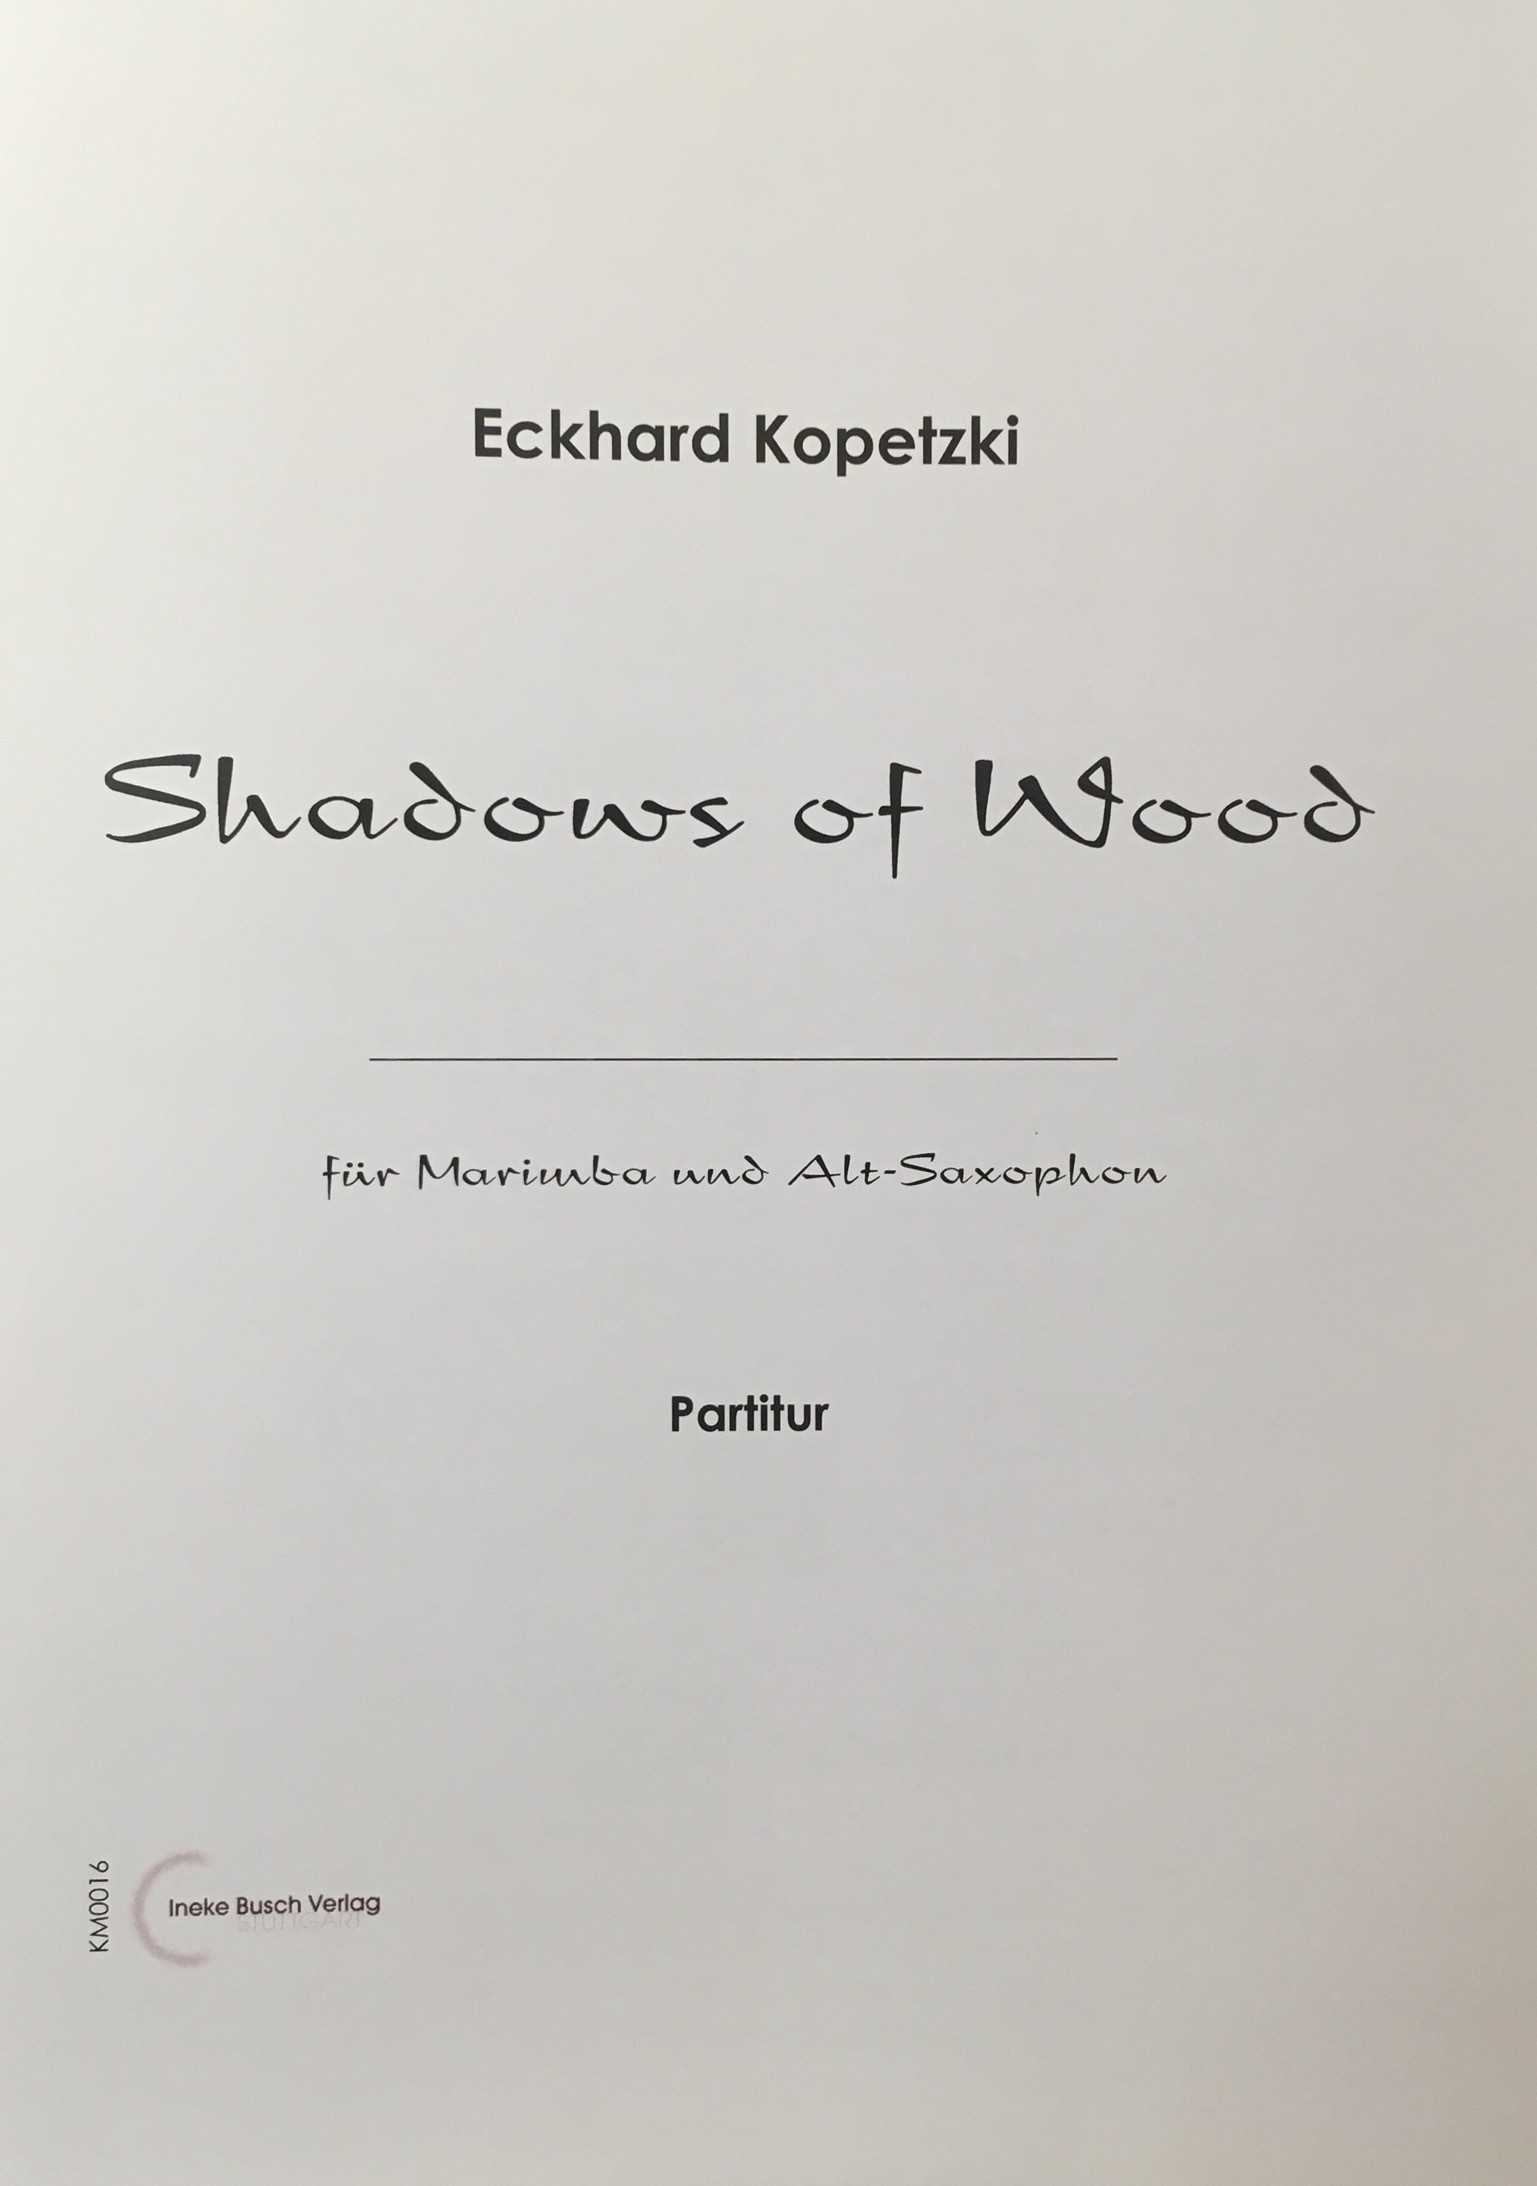 Shadows of Wood by Eckhard Kopetzki